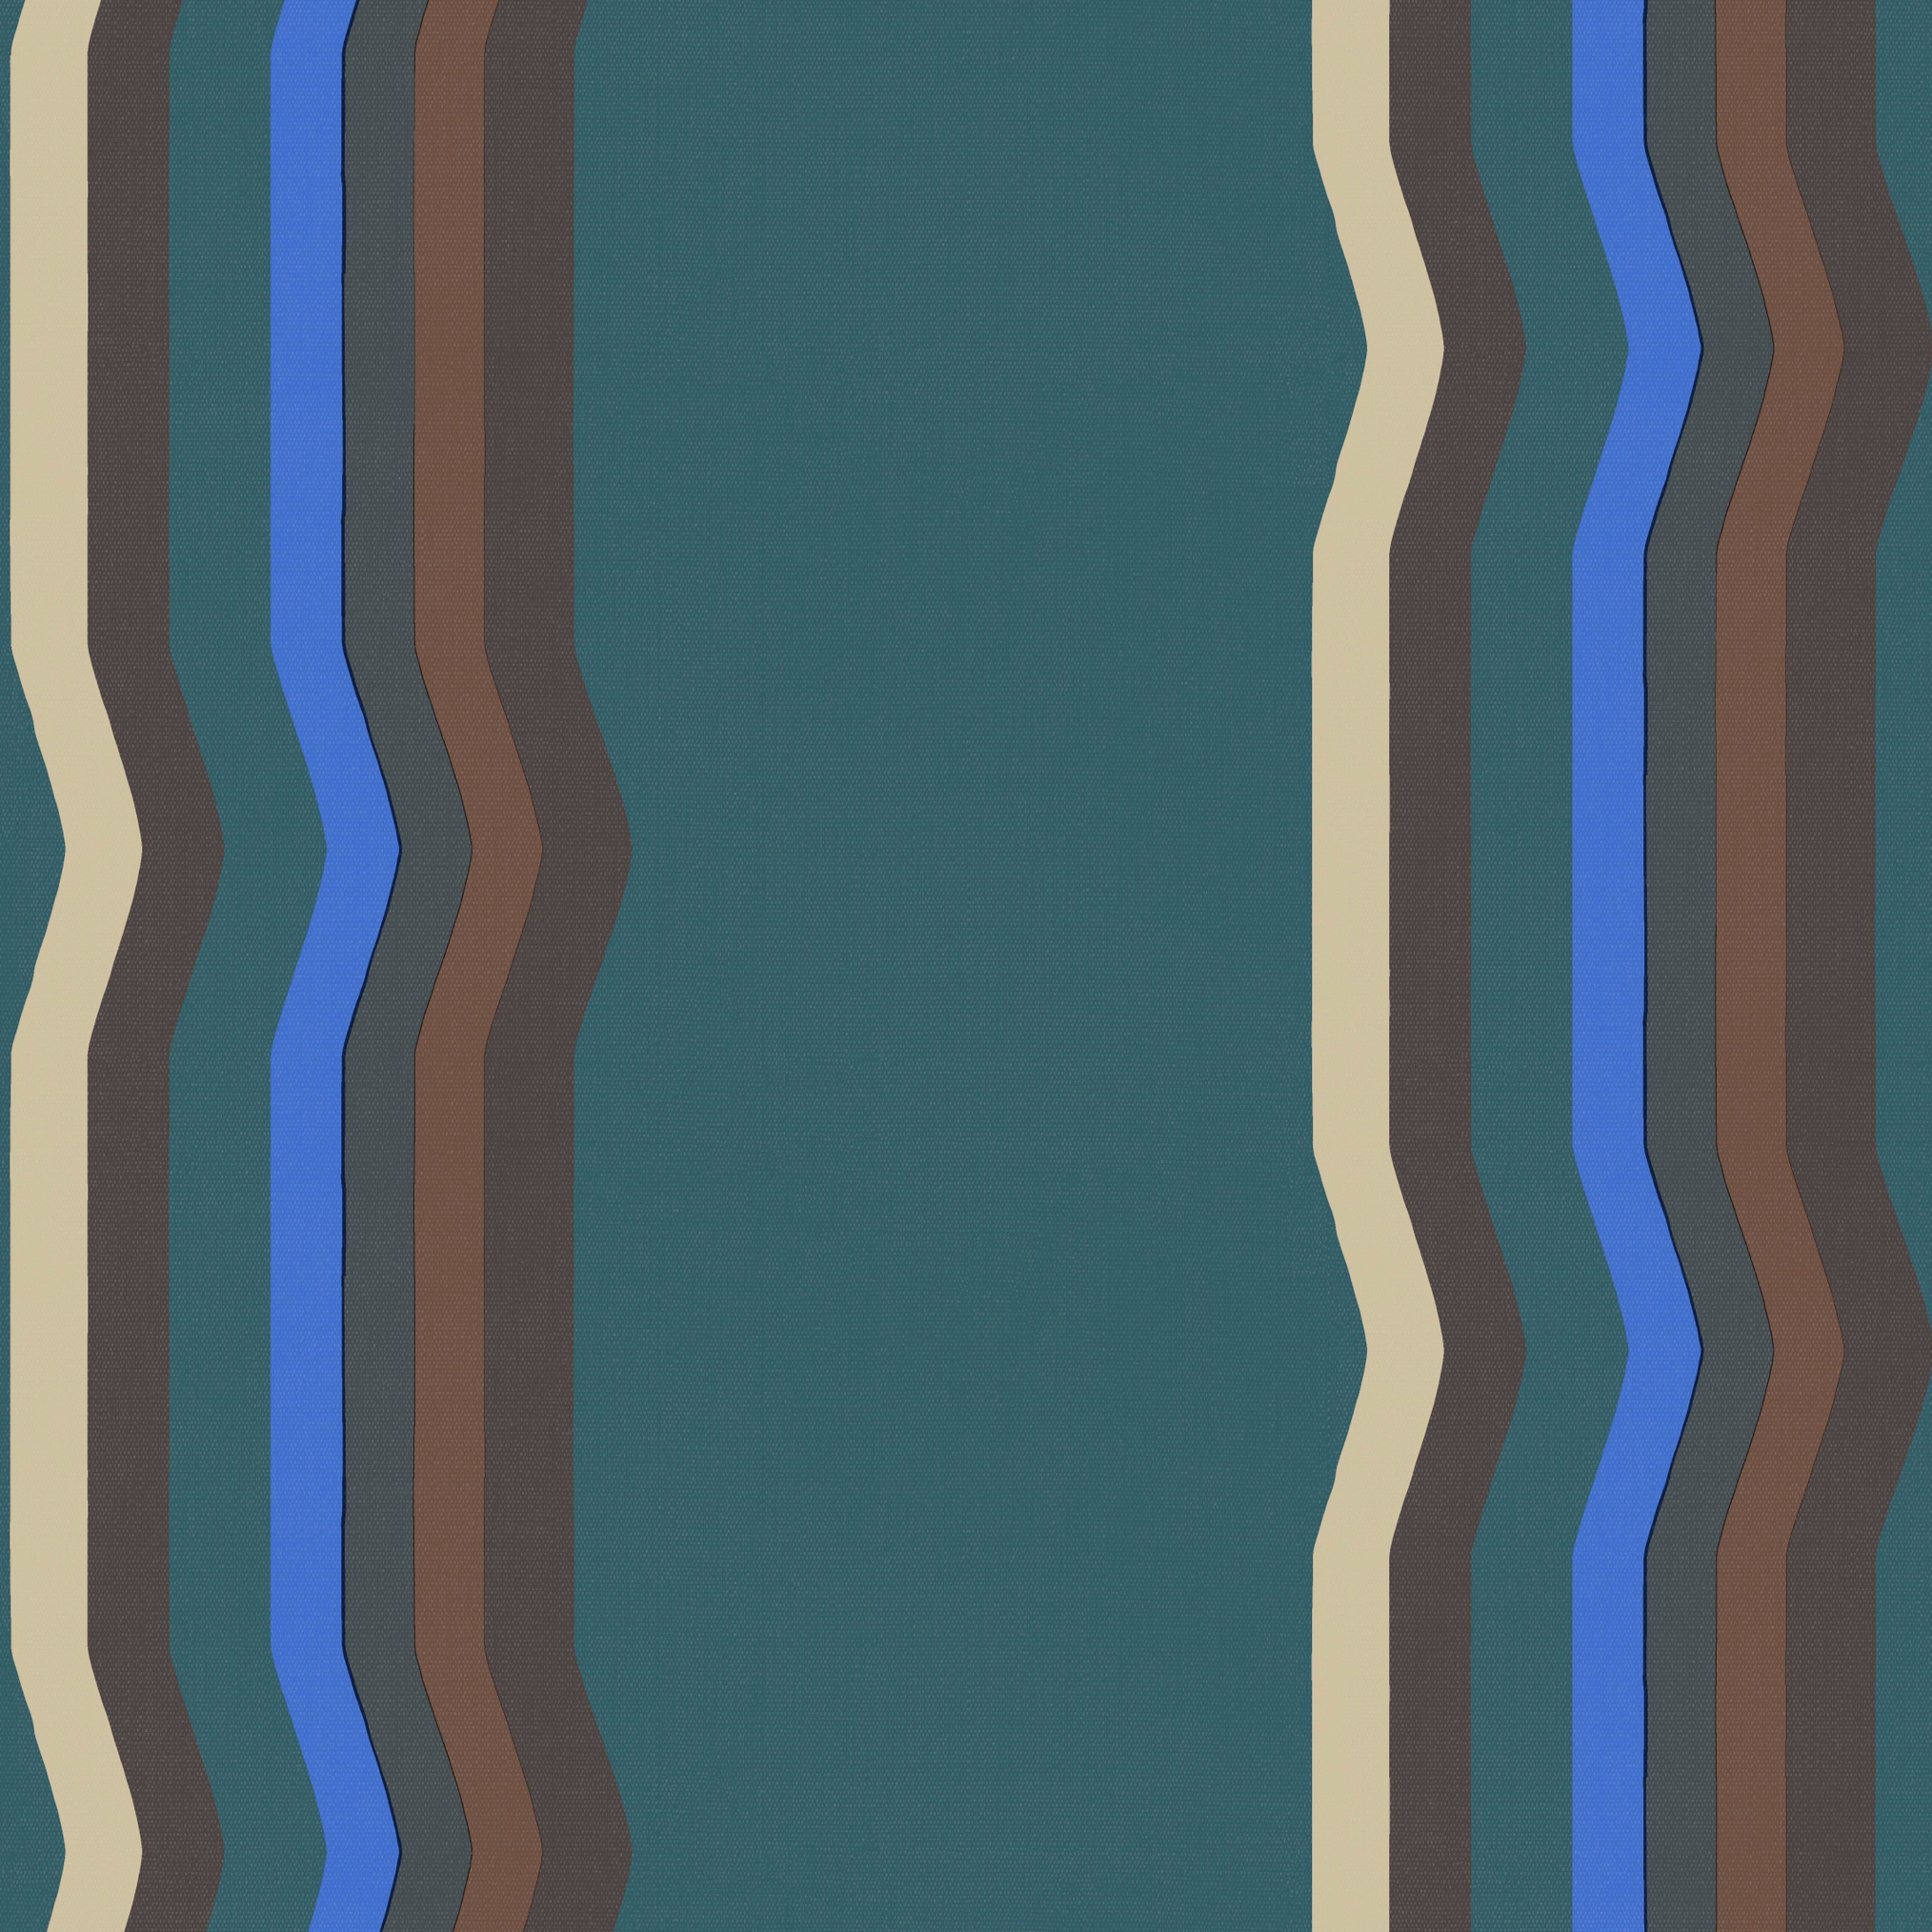 Off - Set Retro Stripe wallpaper - Teal